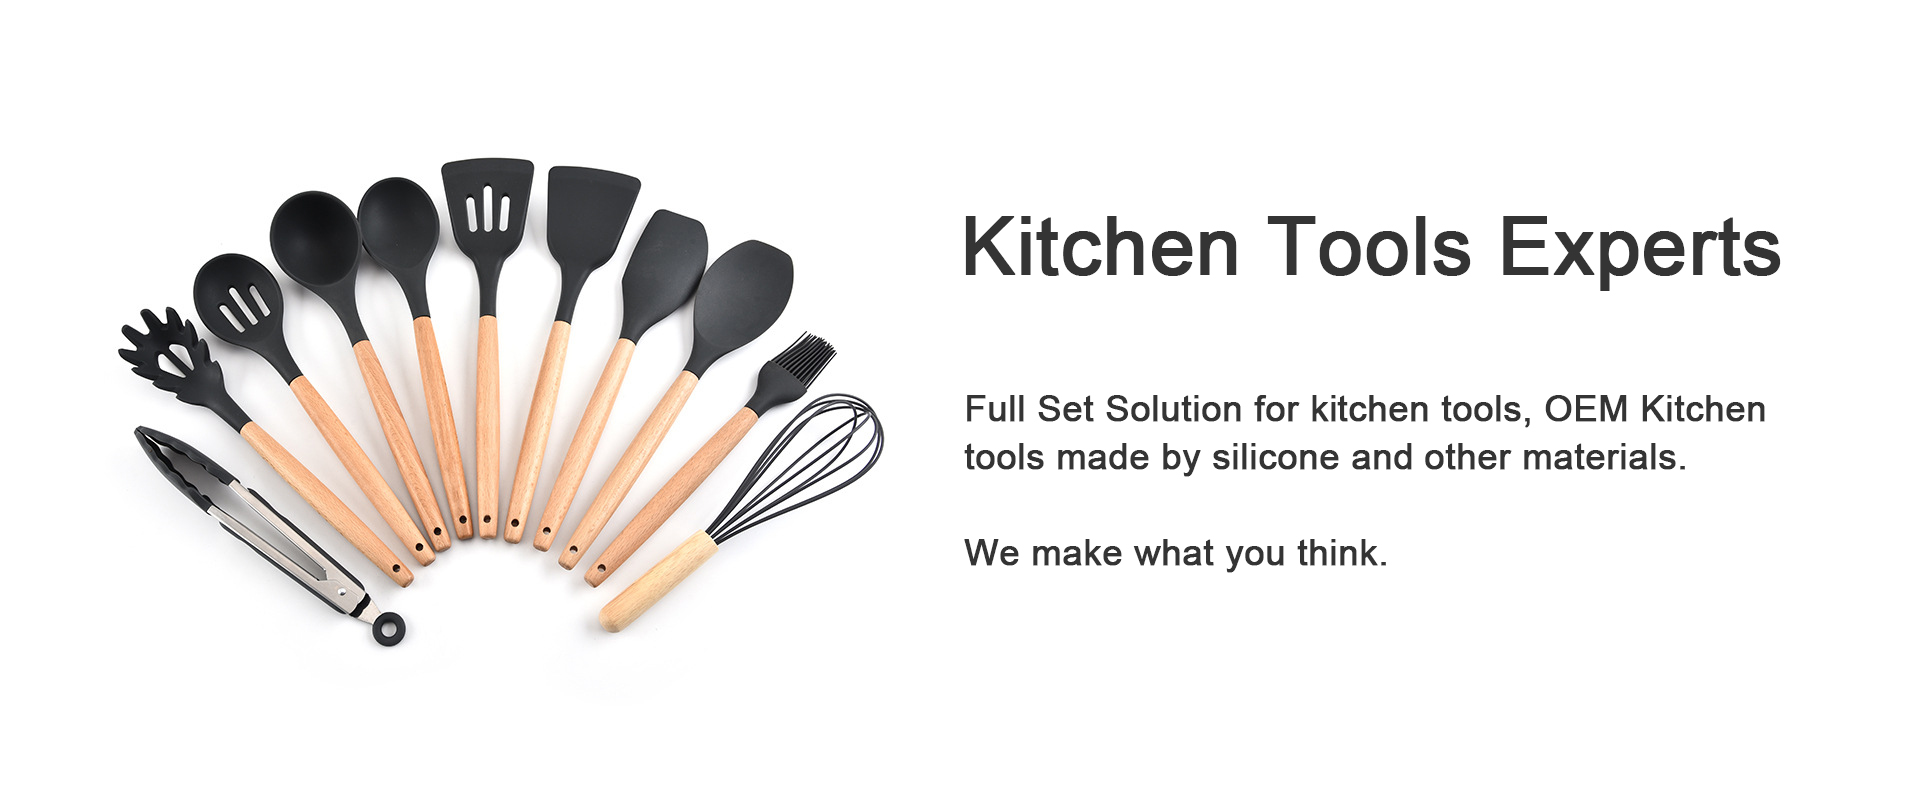 Kitchen Tools Experts